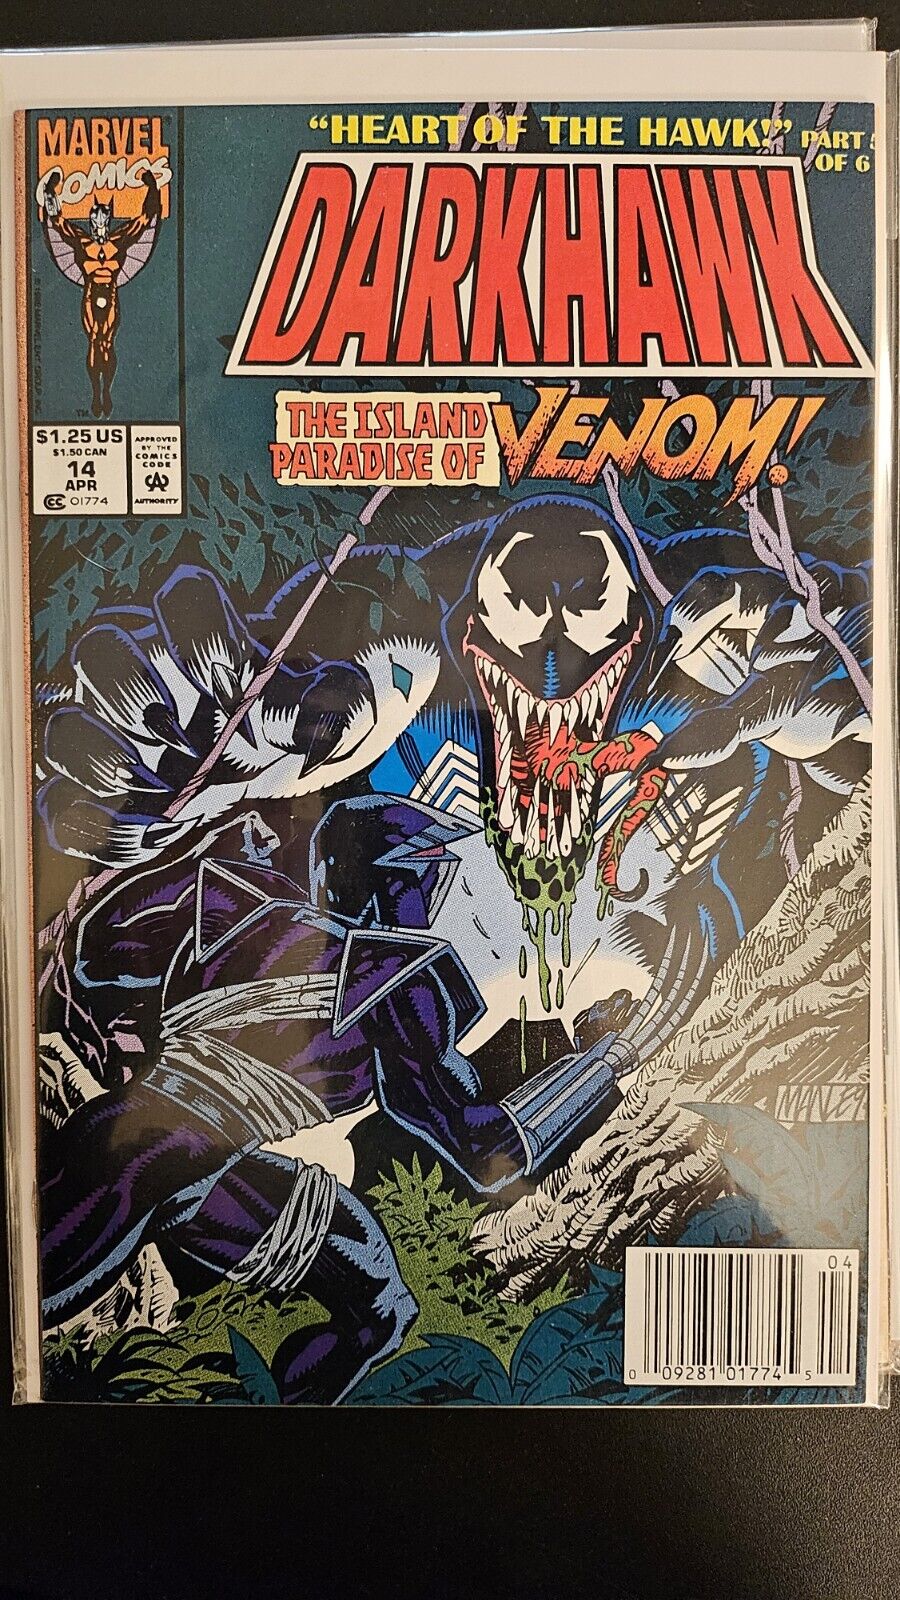 Darkhawk #14 (Marvel, April 1992)